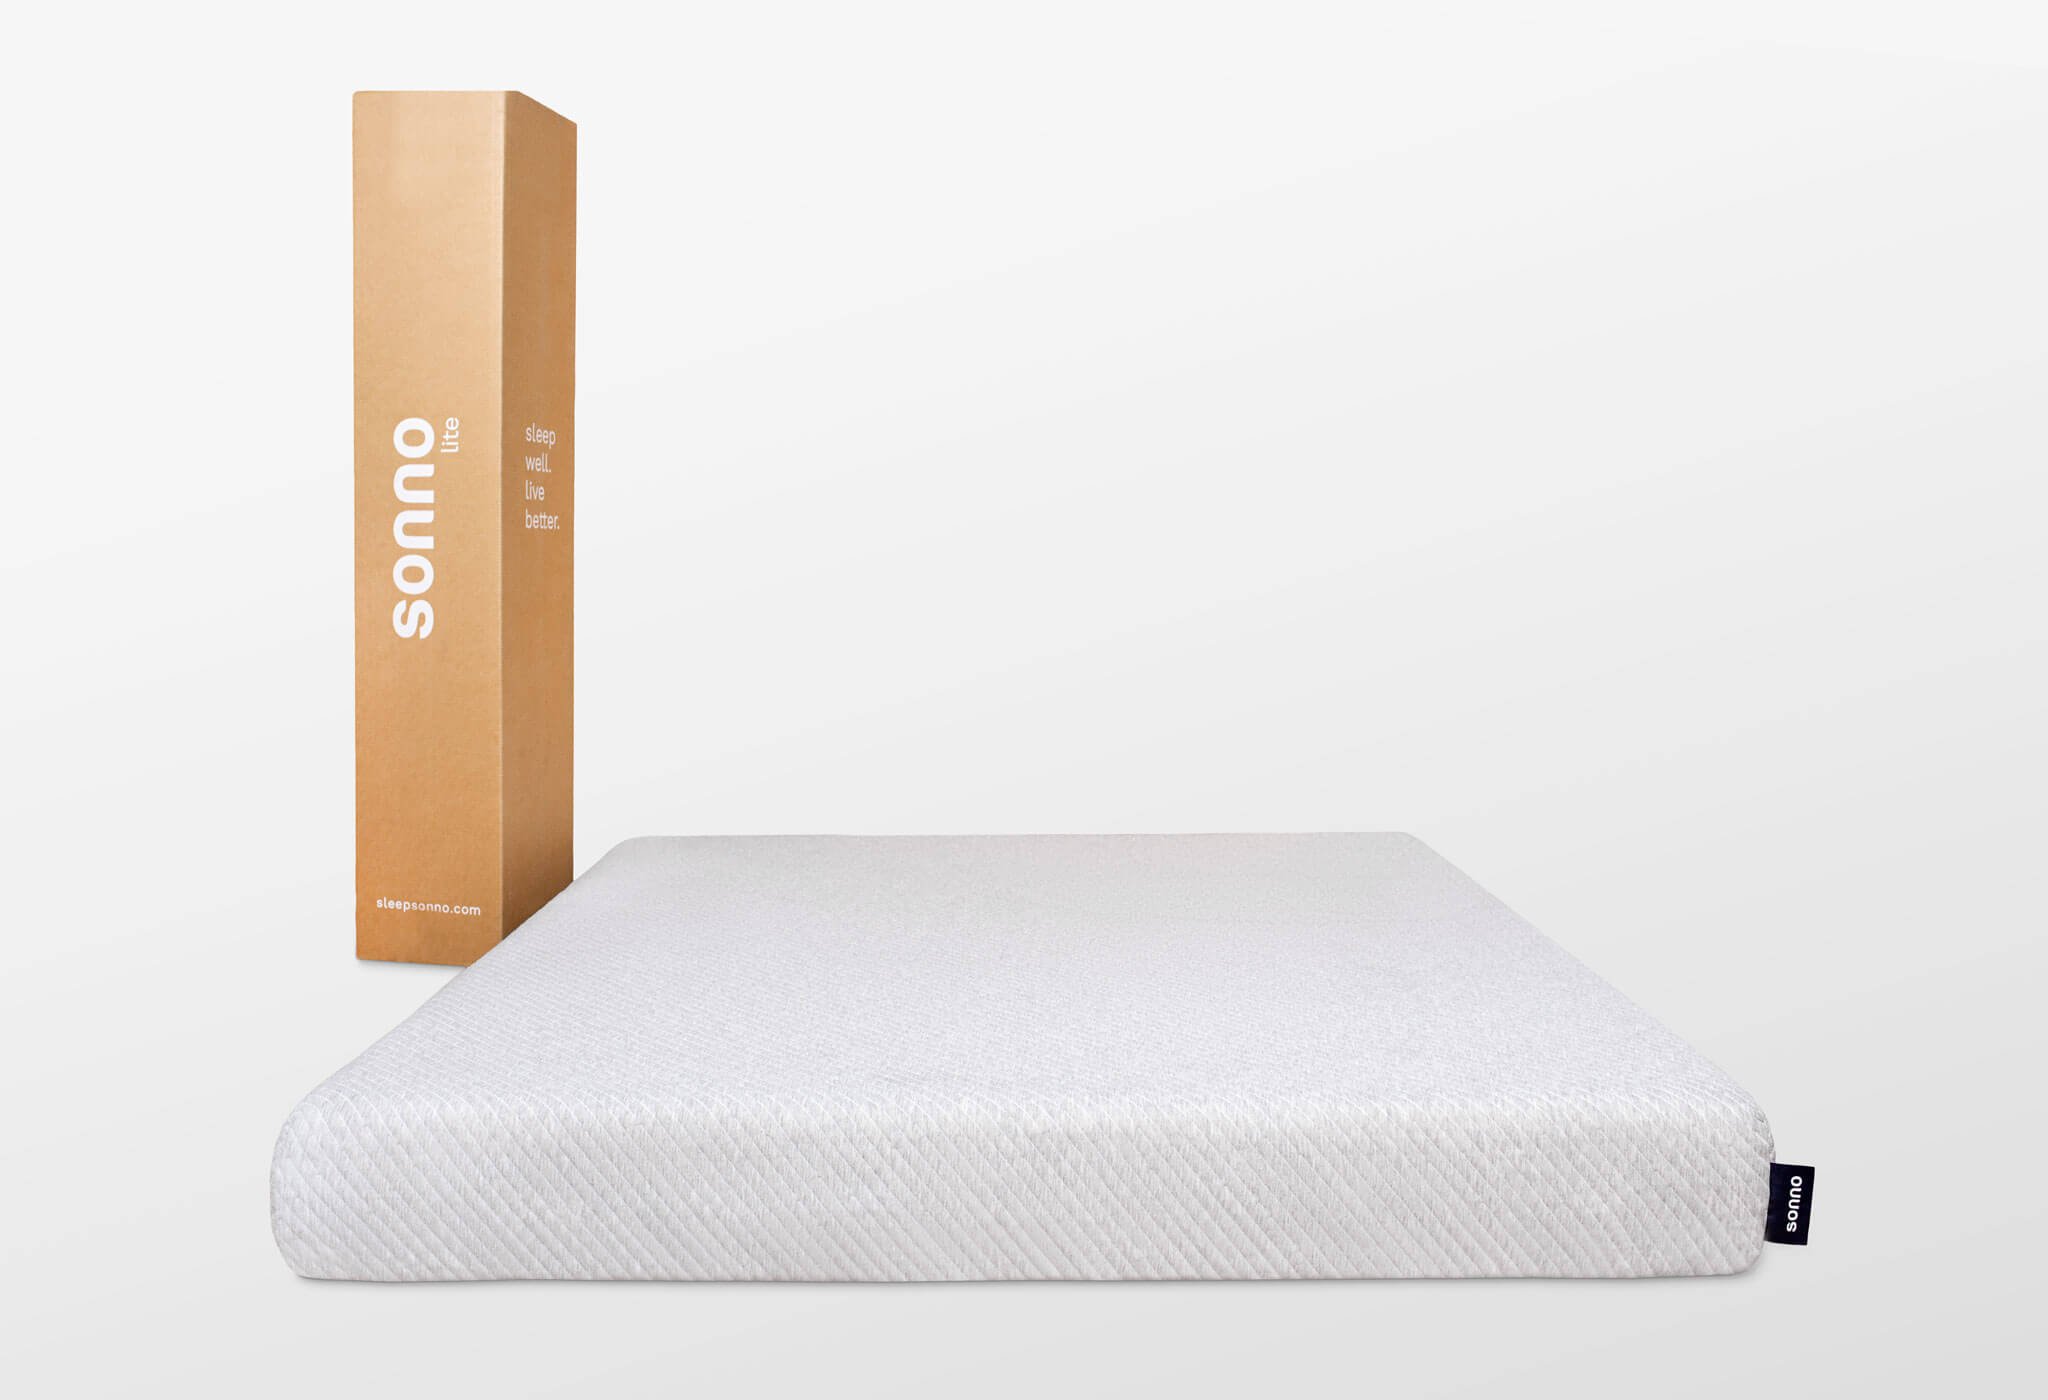 Sonno Lite mattress full view with box